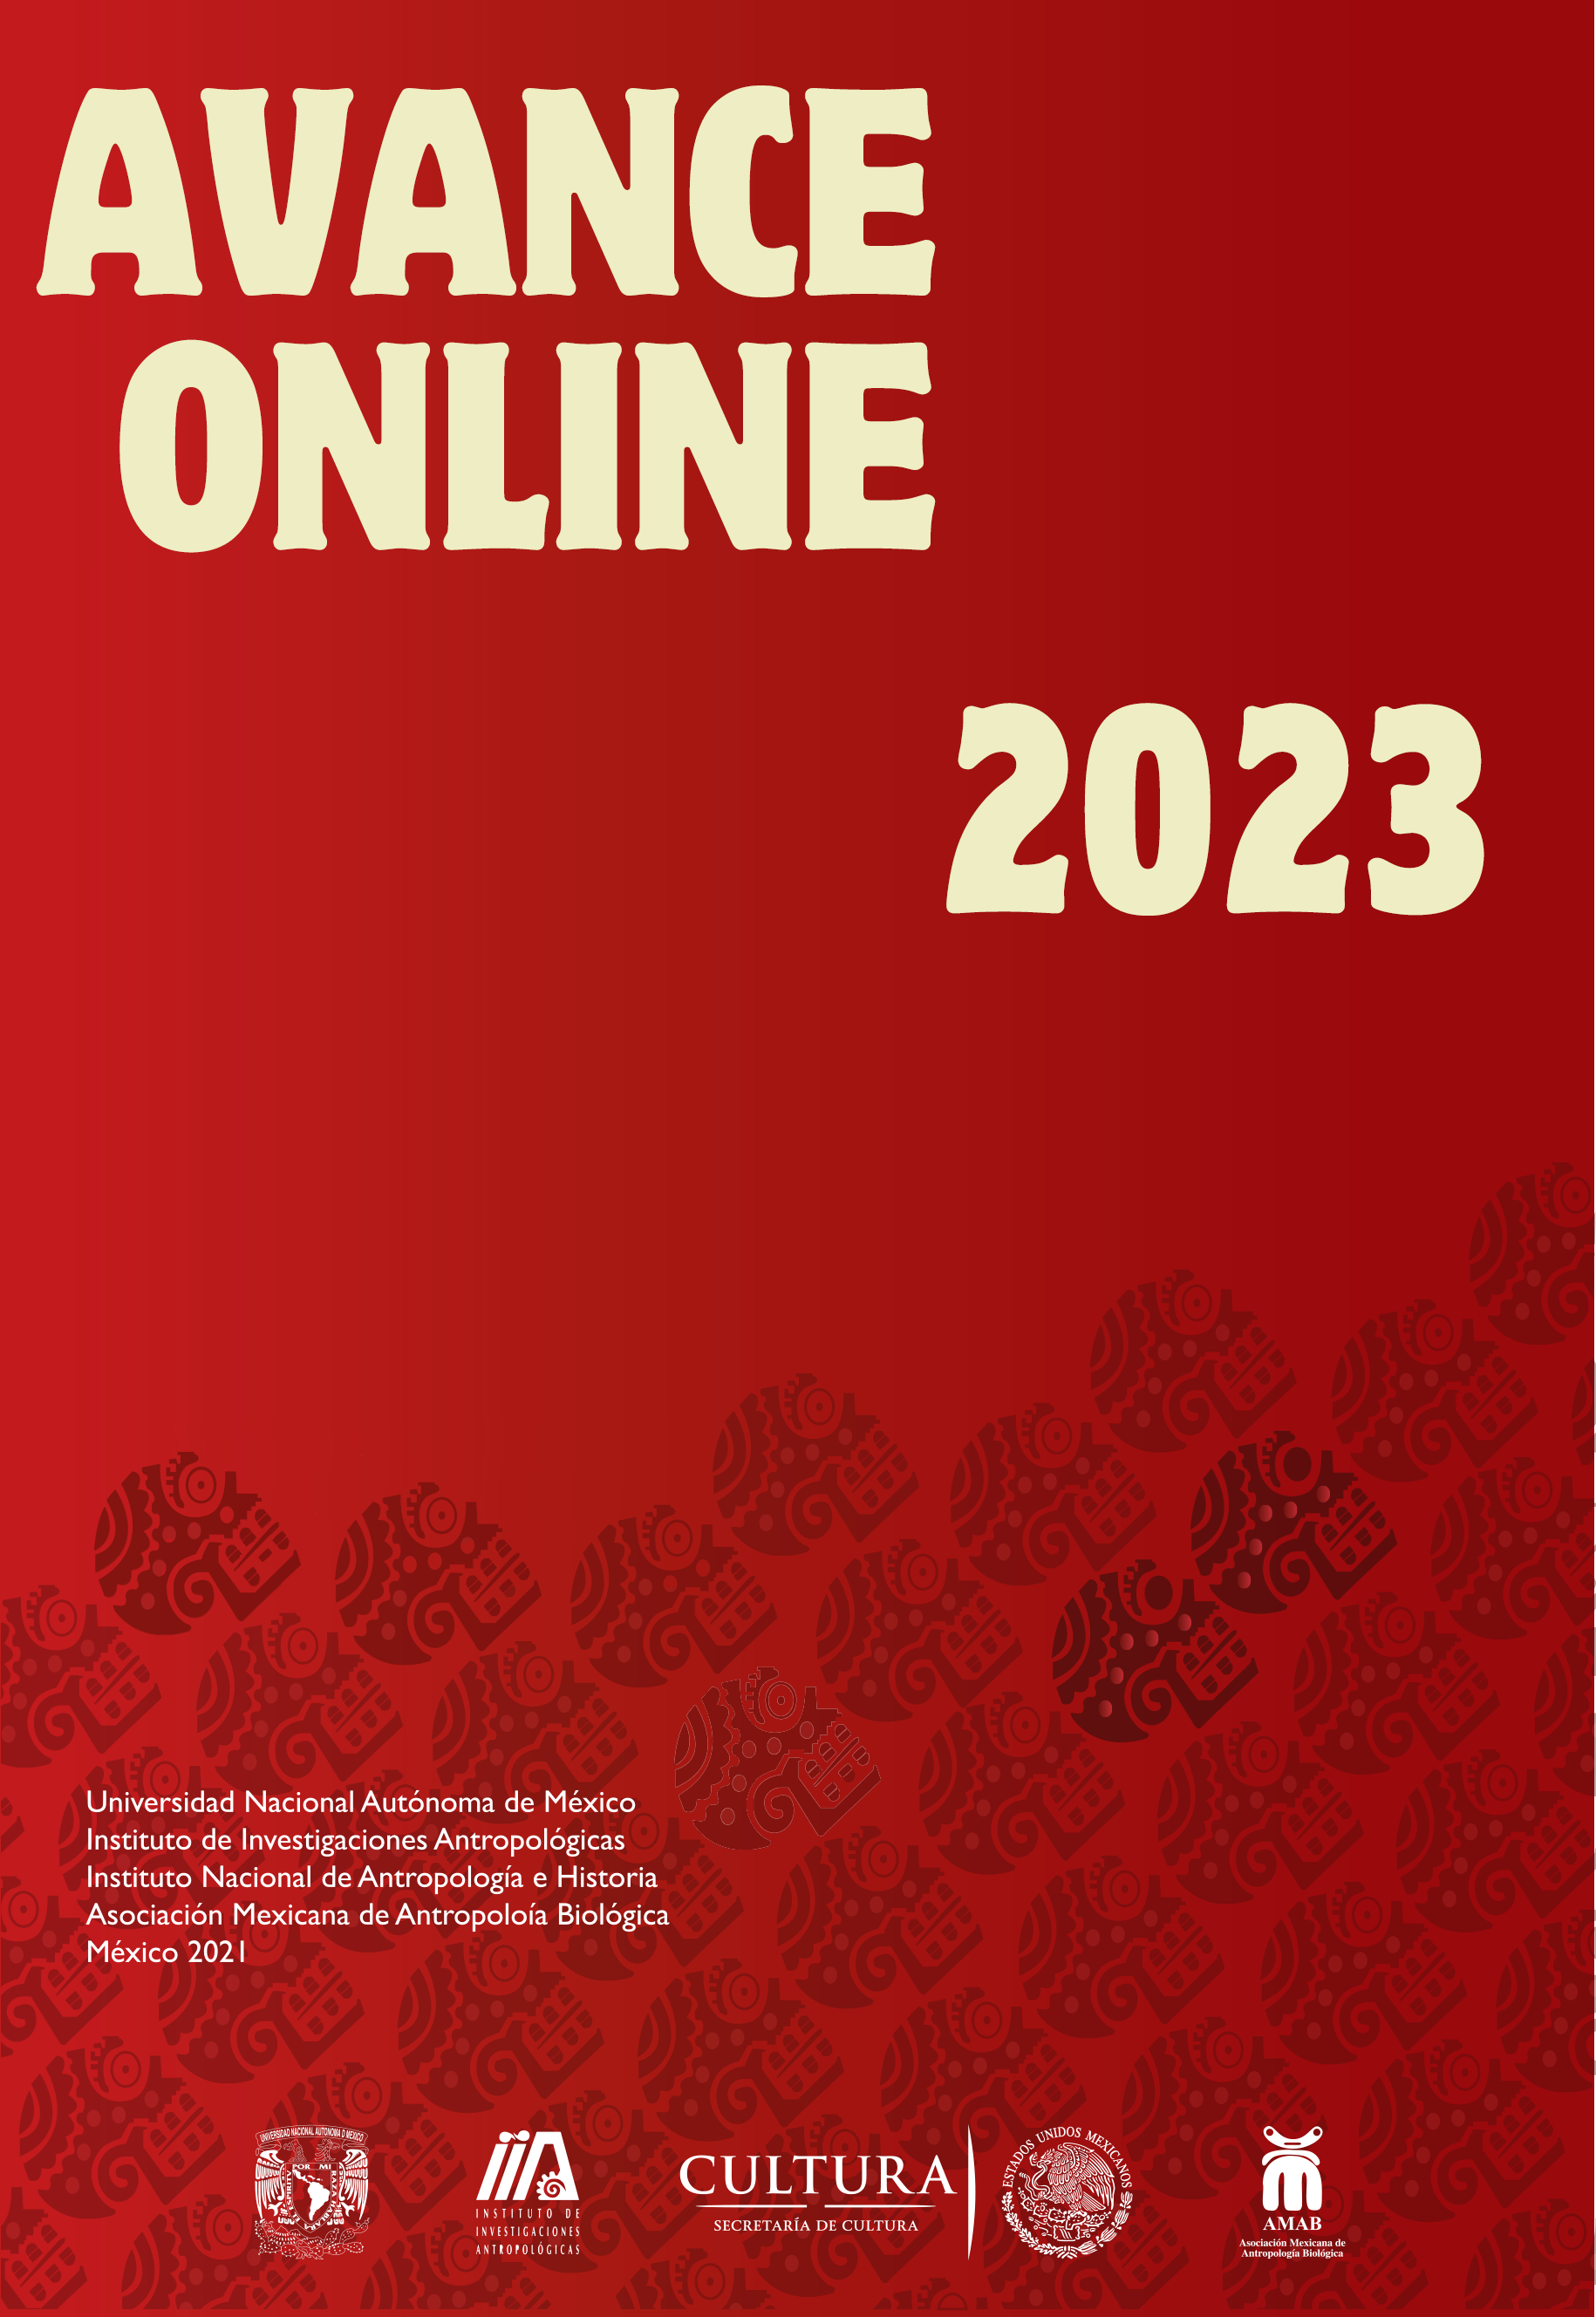 					View 2023: Avance online 2023
				